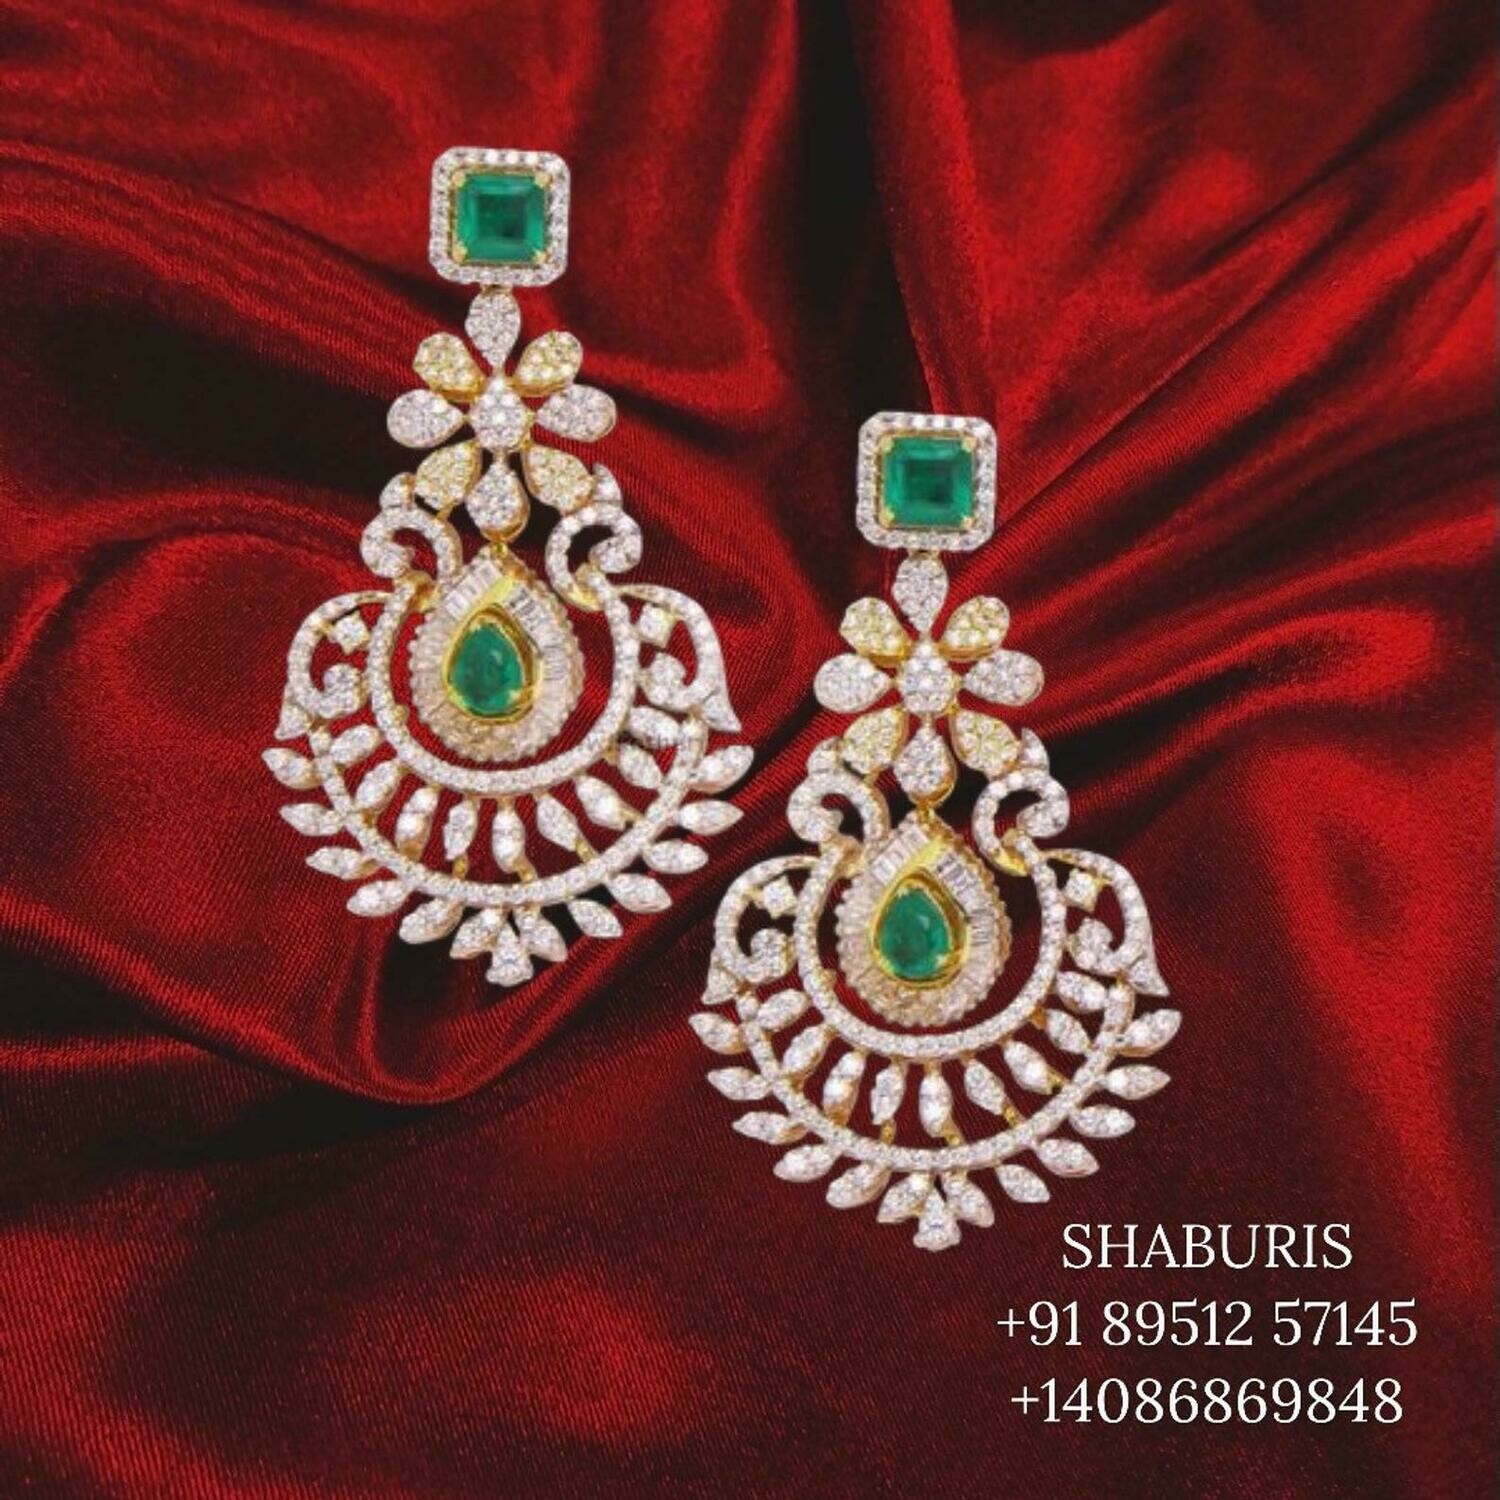 Diamond Jewelry Designs,South Indian jewelry,gold Jewelry,emerald Earrings,latest indian jewellery Designs - NIHIRA-SHABURIS